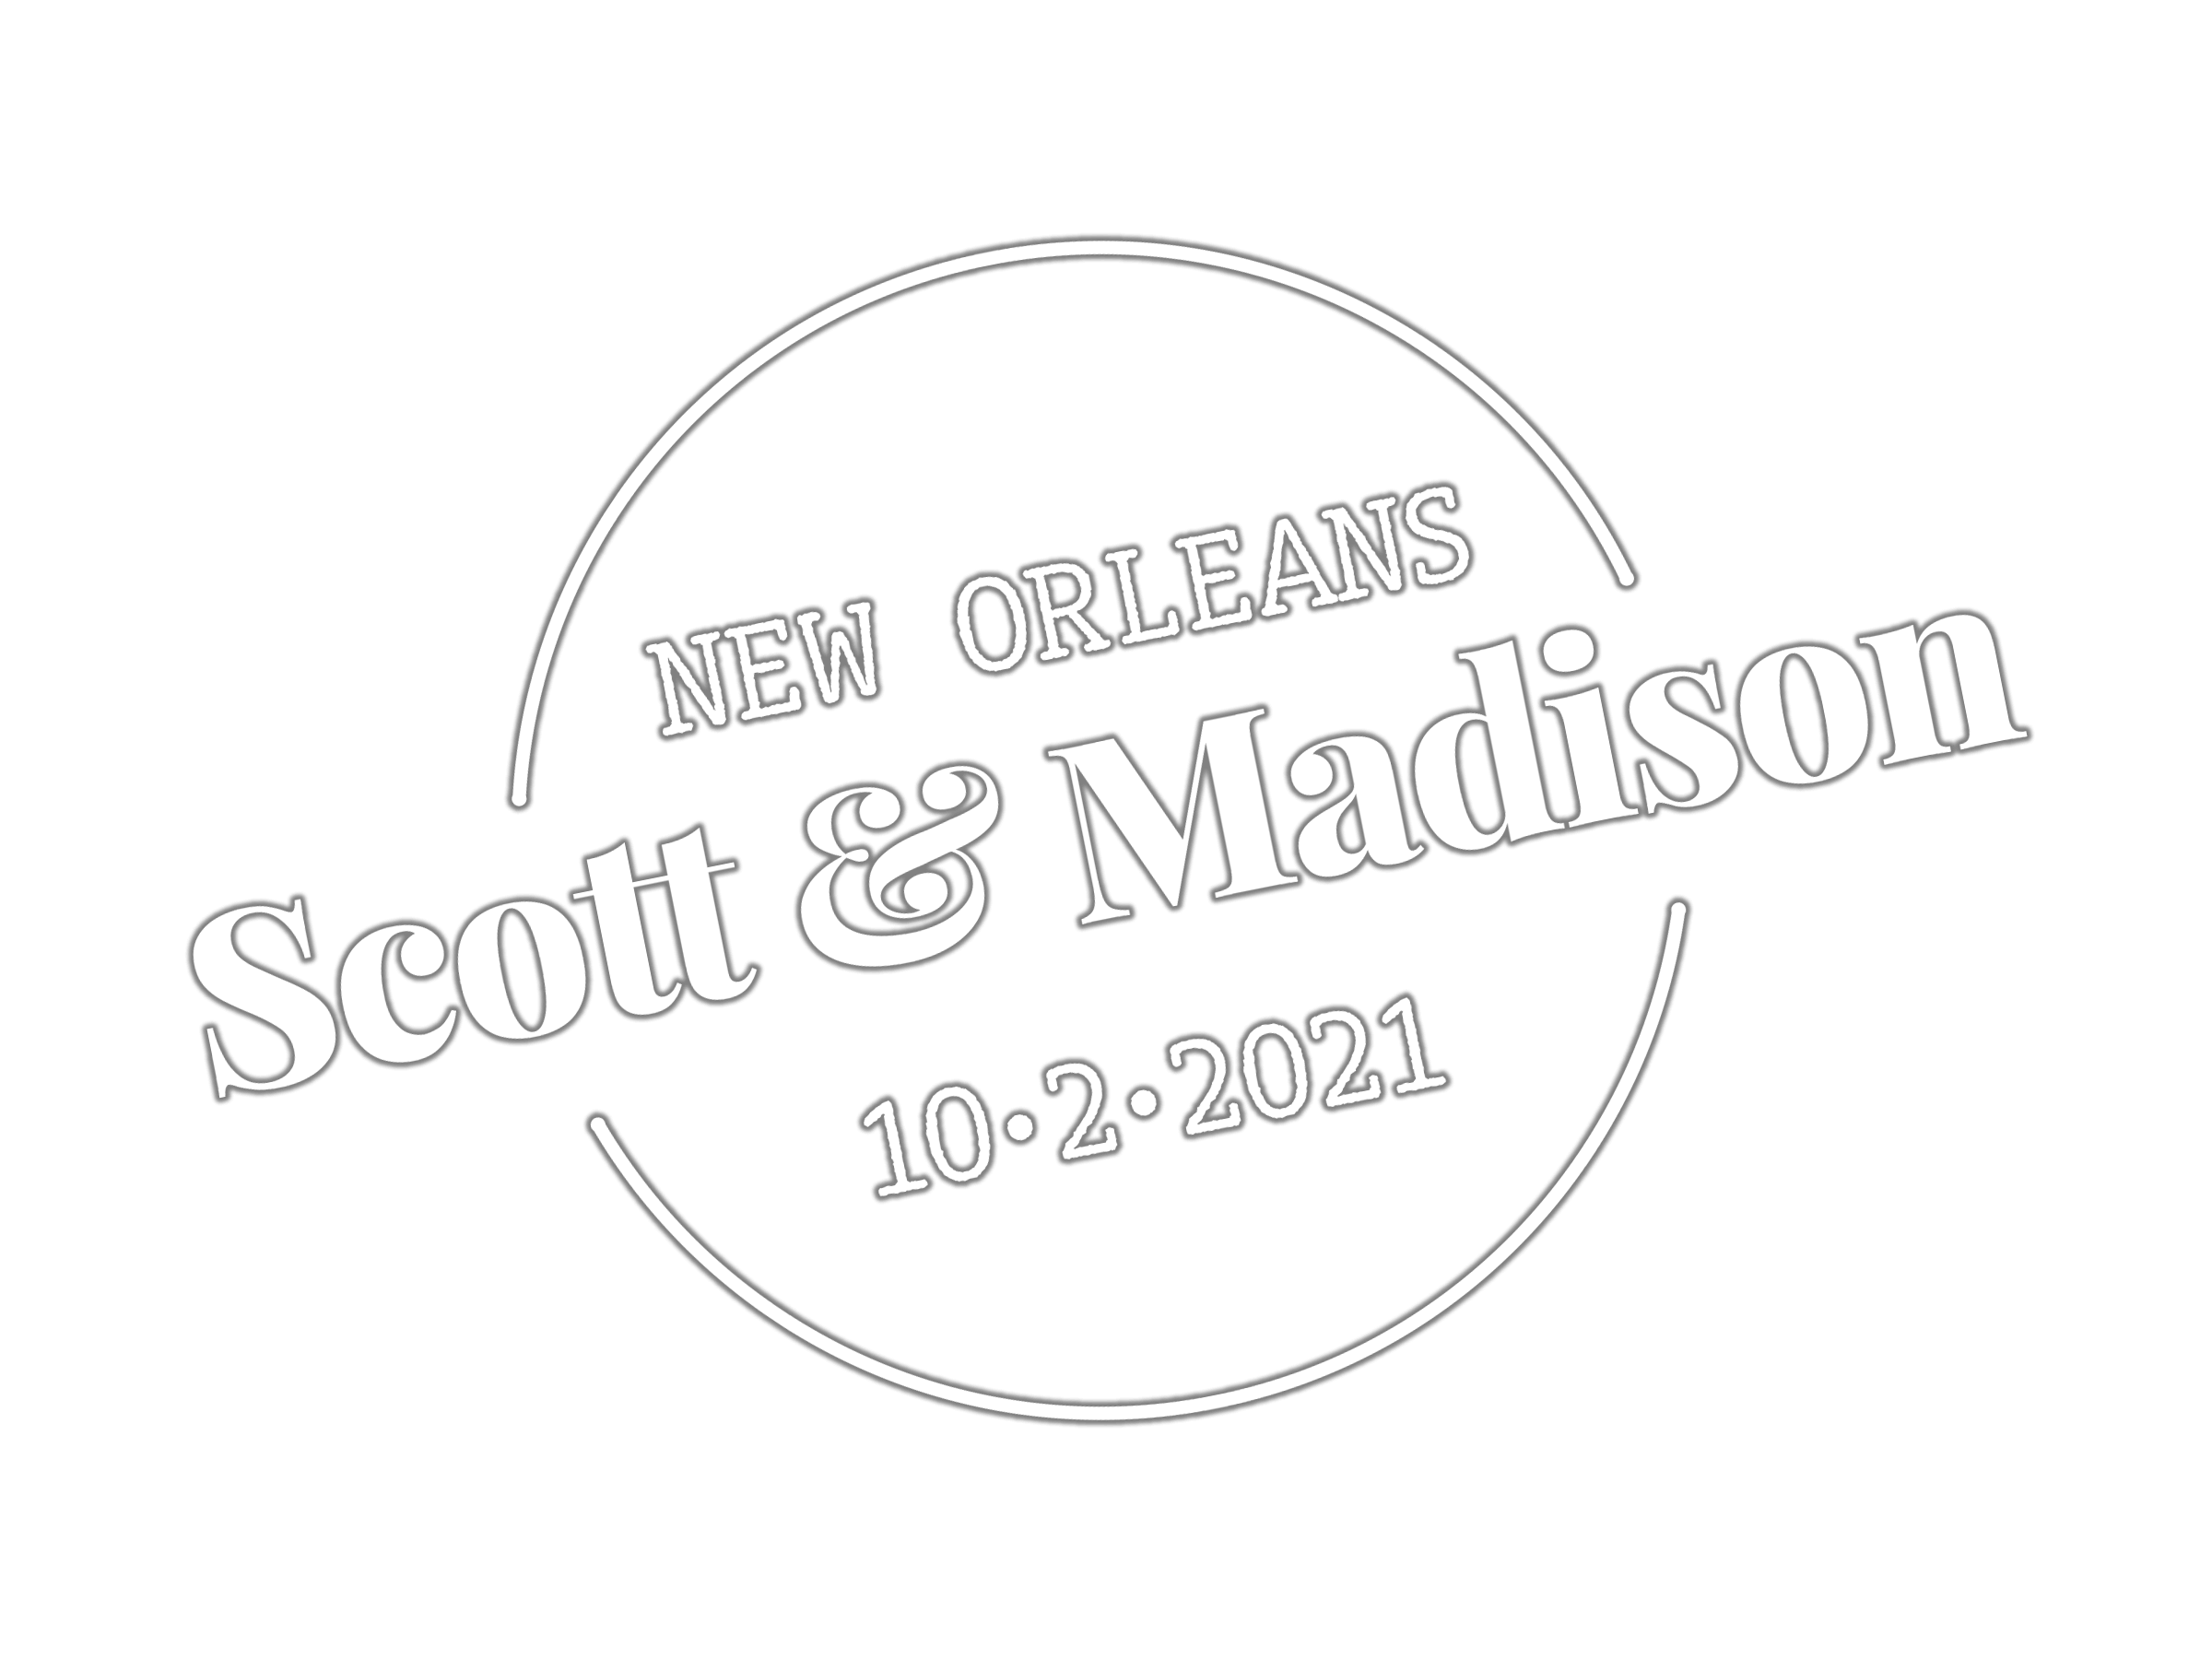 Scott & Madison